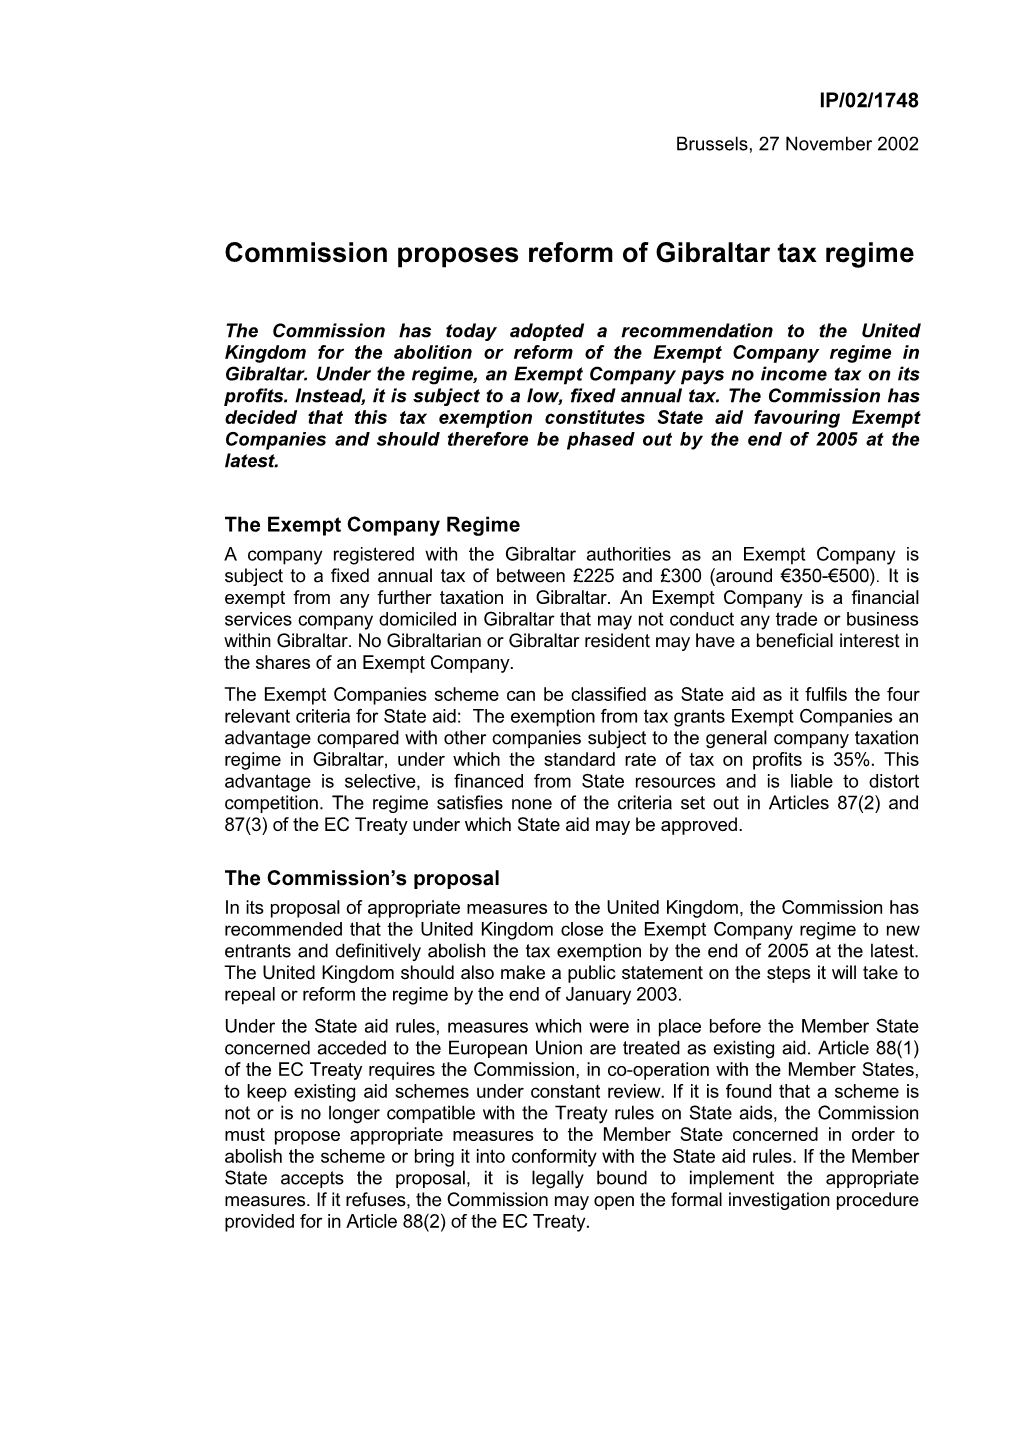 Commission Proposes Reform of Gibraltar Tax Regime